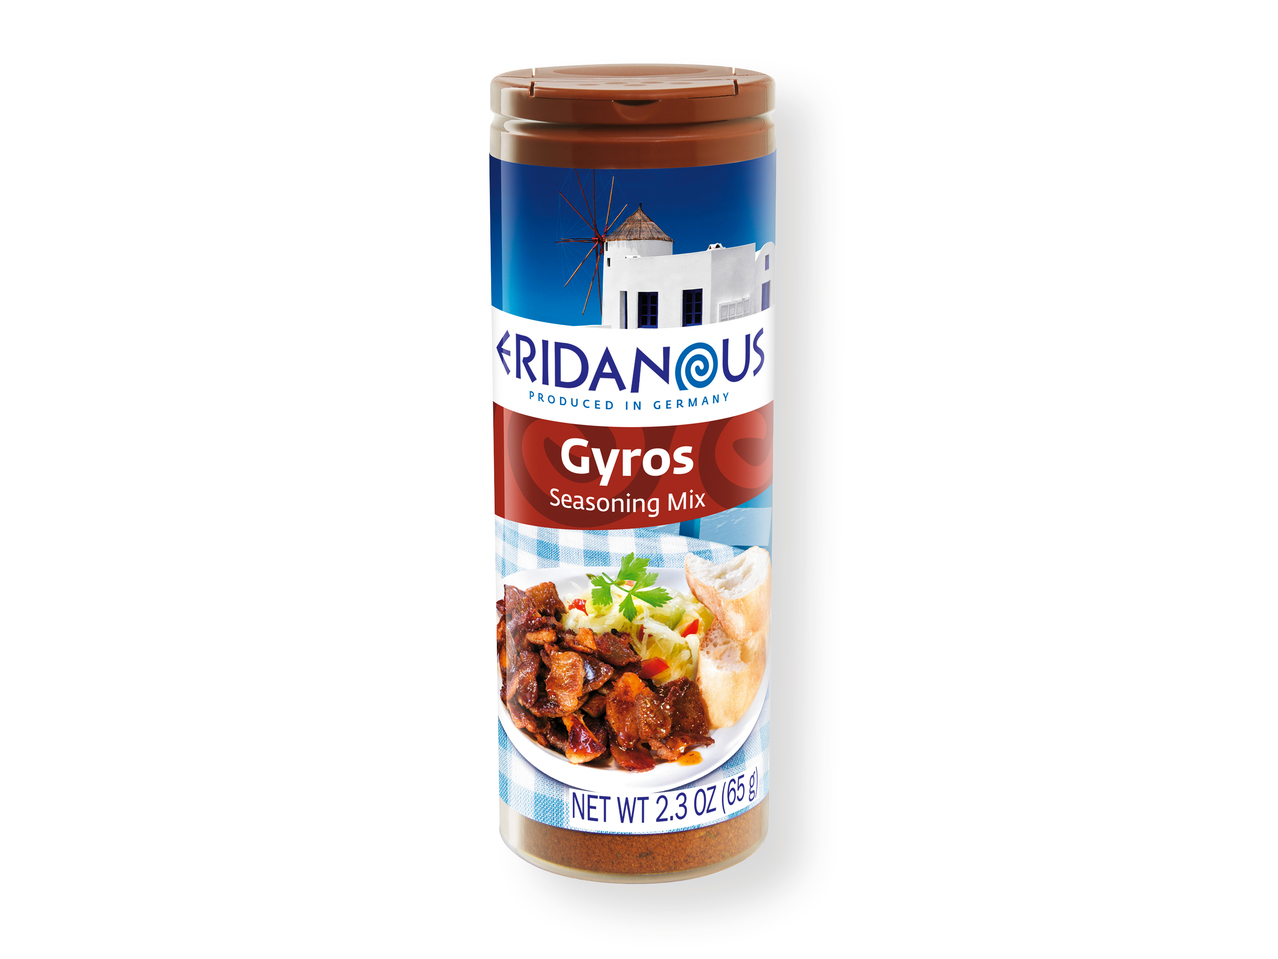 'Eridanous(R)' Condimentos griegos